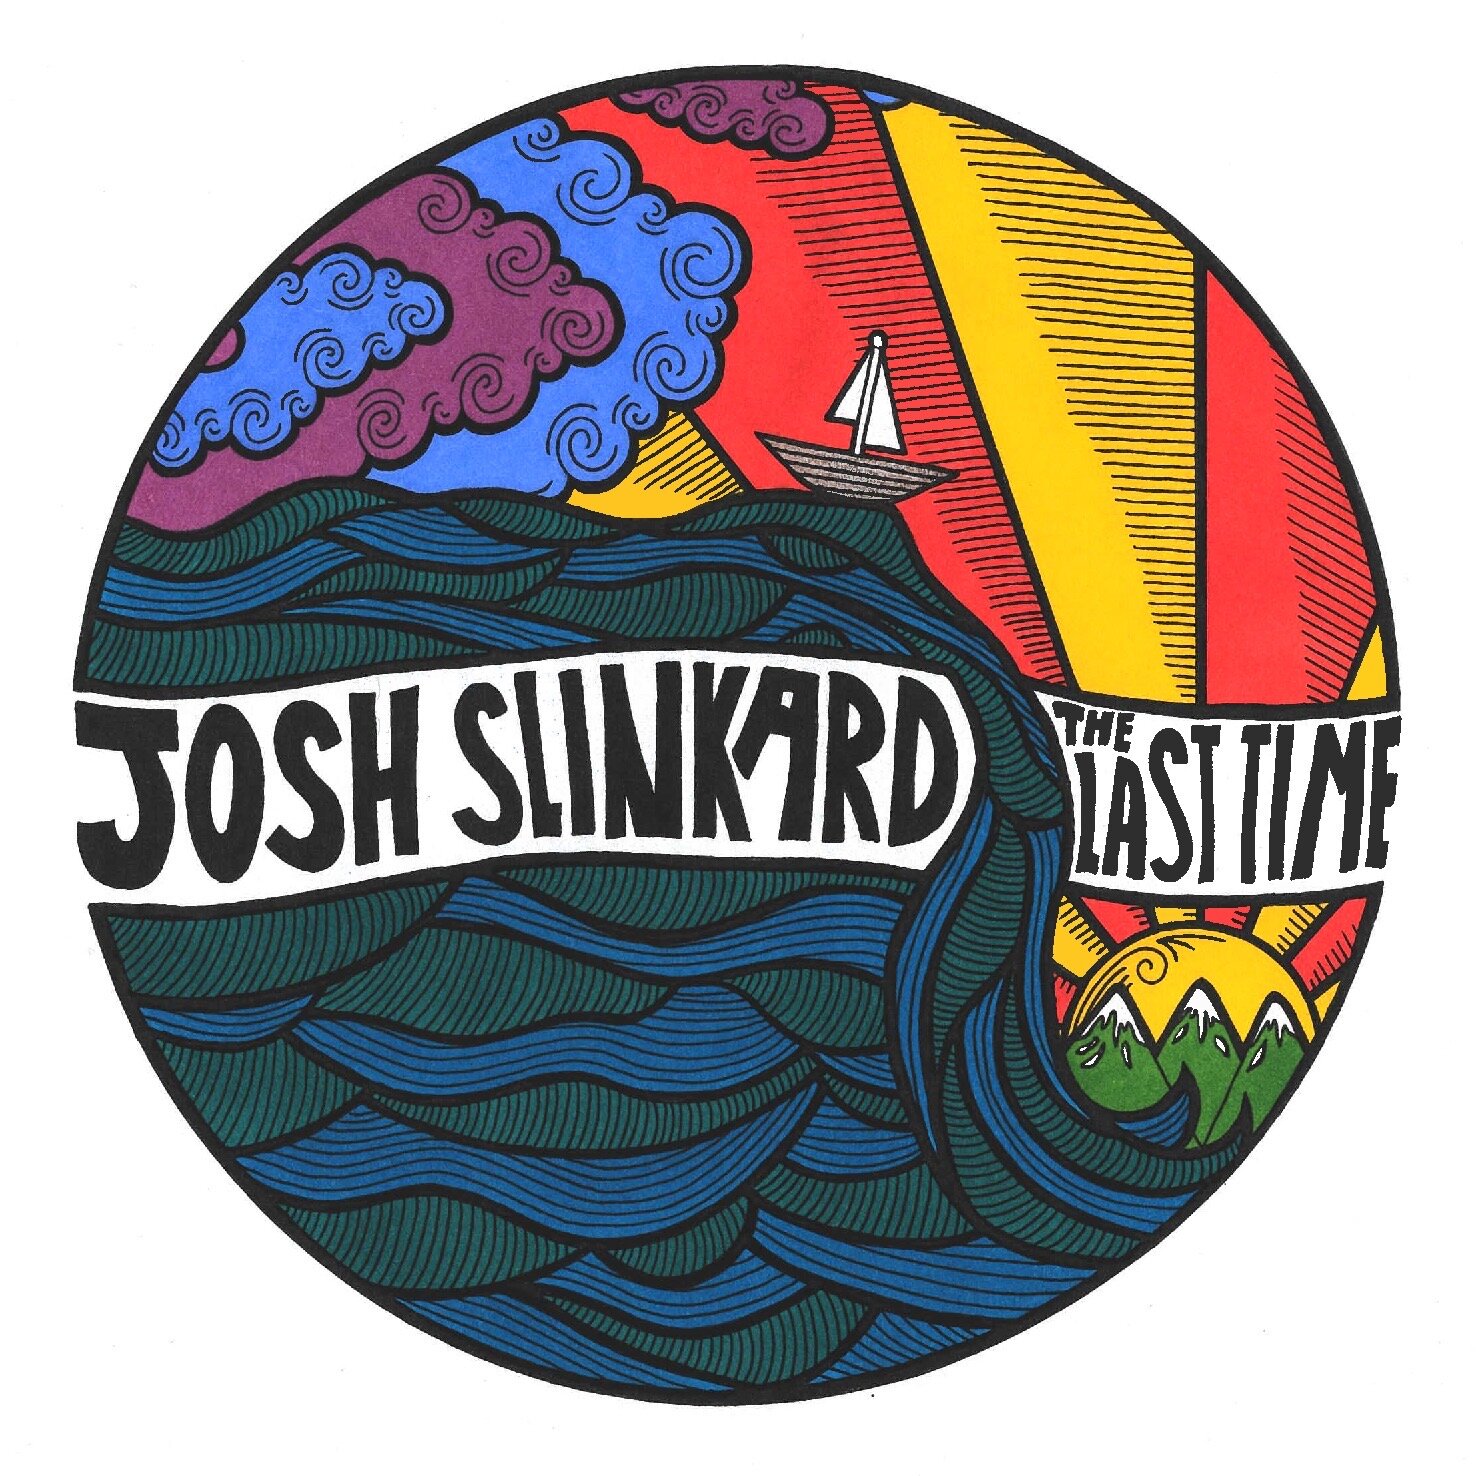 Josh Slinkard "The Last Time" Single Art